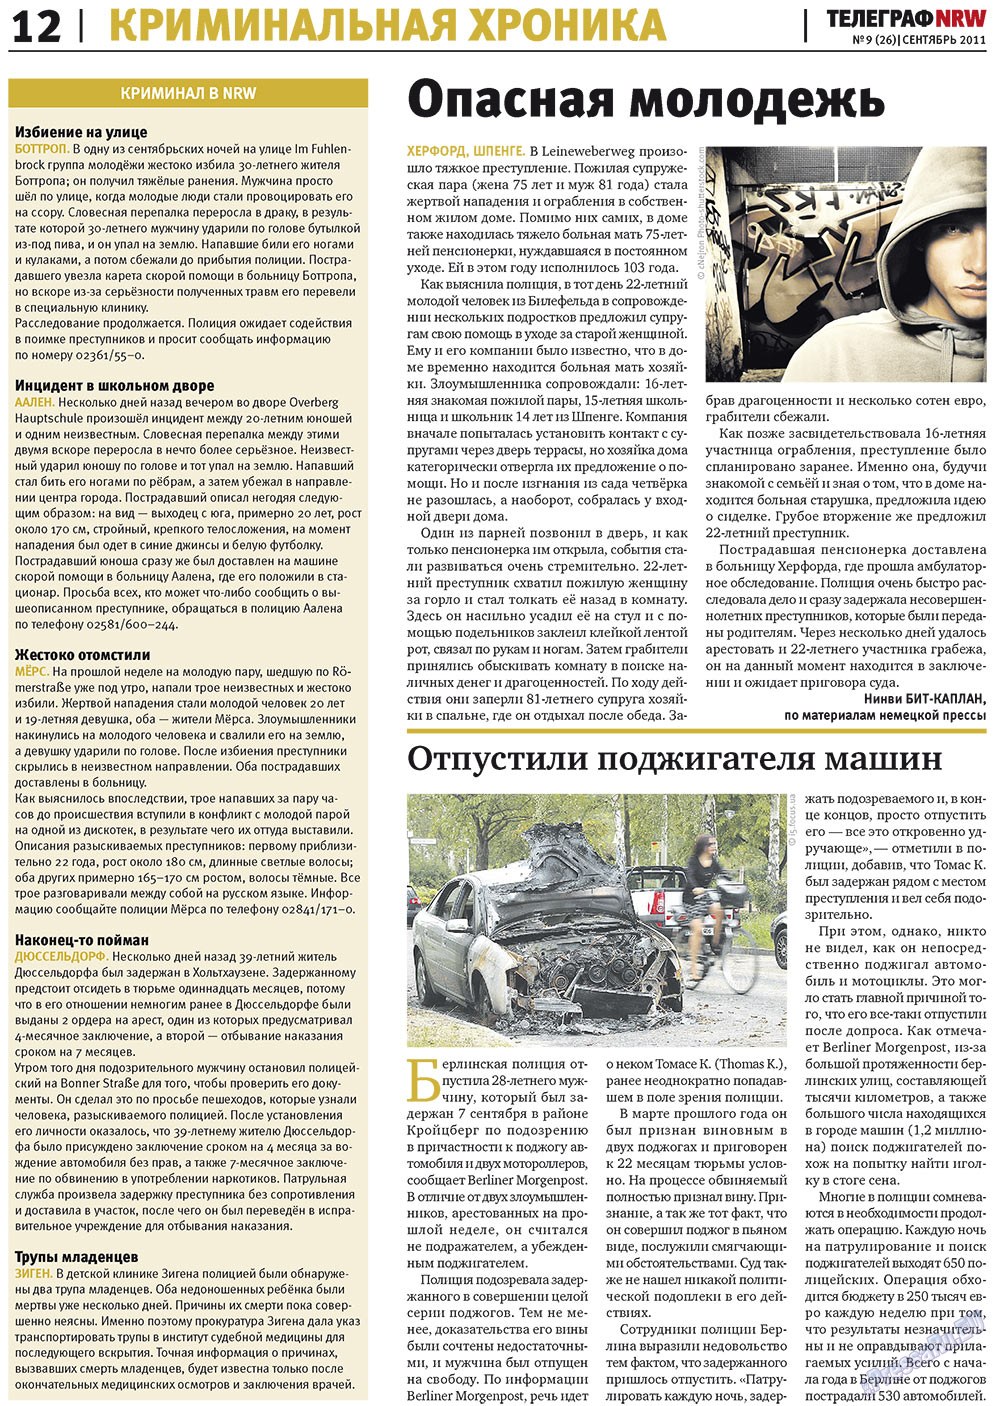 Телеграф NRW, газета. 2011 №9 стр.12